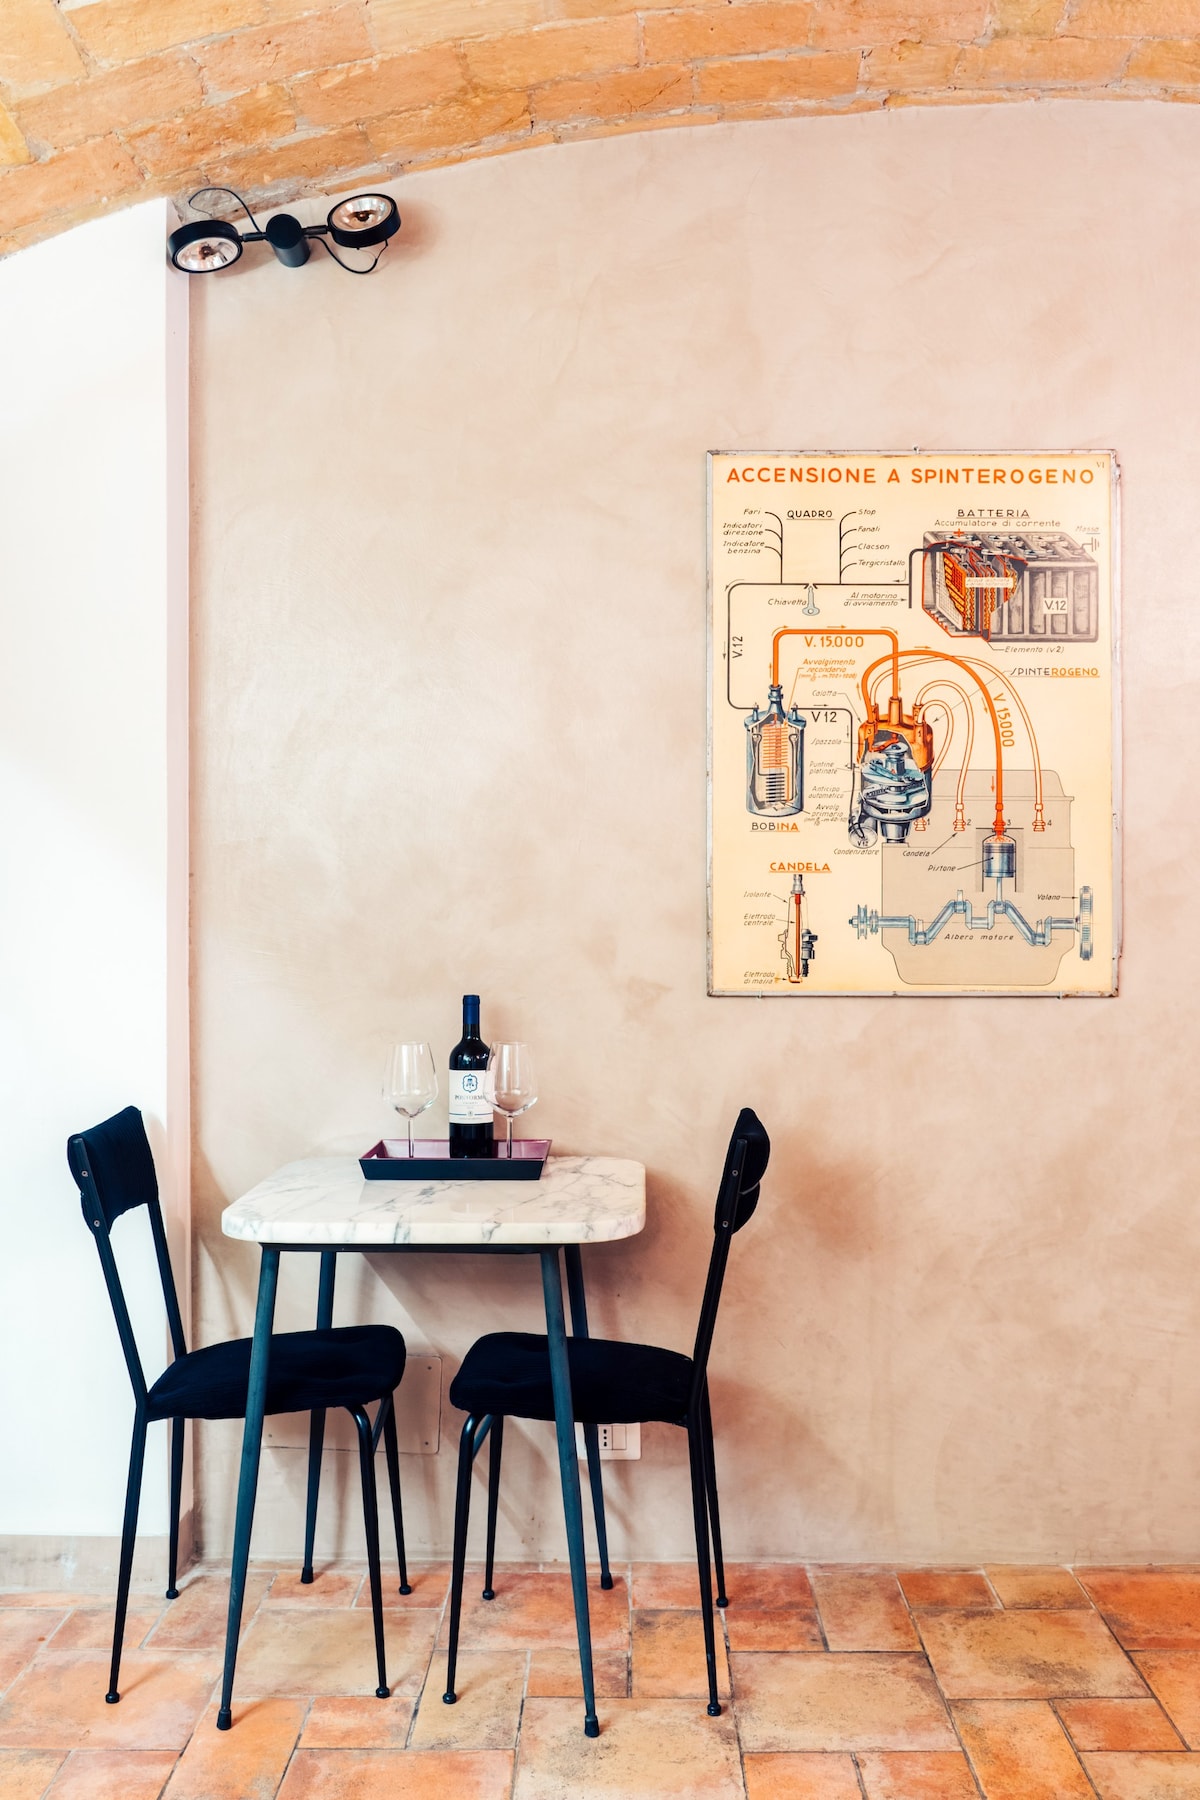 Colosseo咖啡宝石复古设计单间公寓